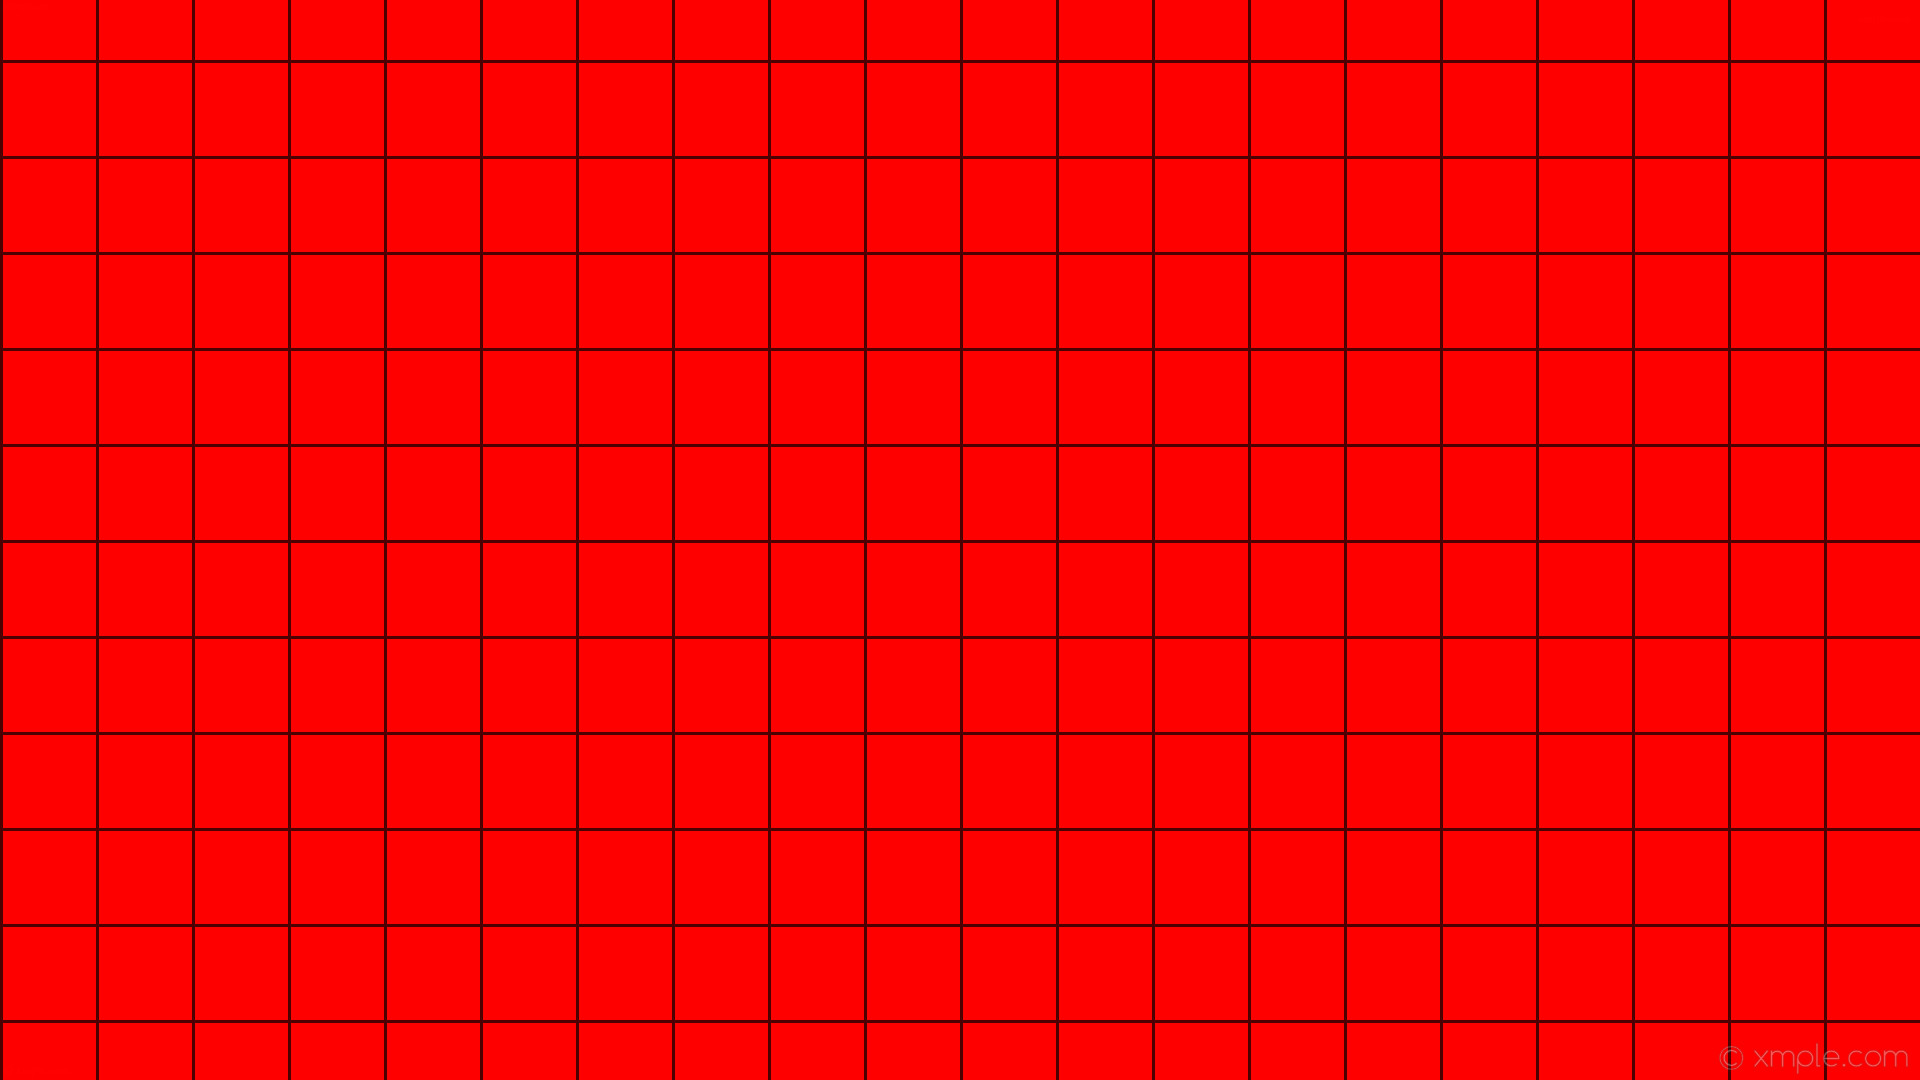 1920x1080 wallpaper graph paper red grid black #ff0000 #000000 0Â° 3px 96px